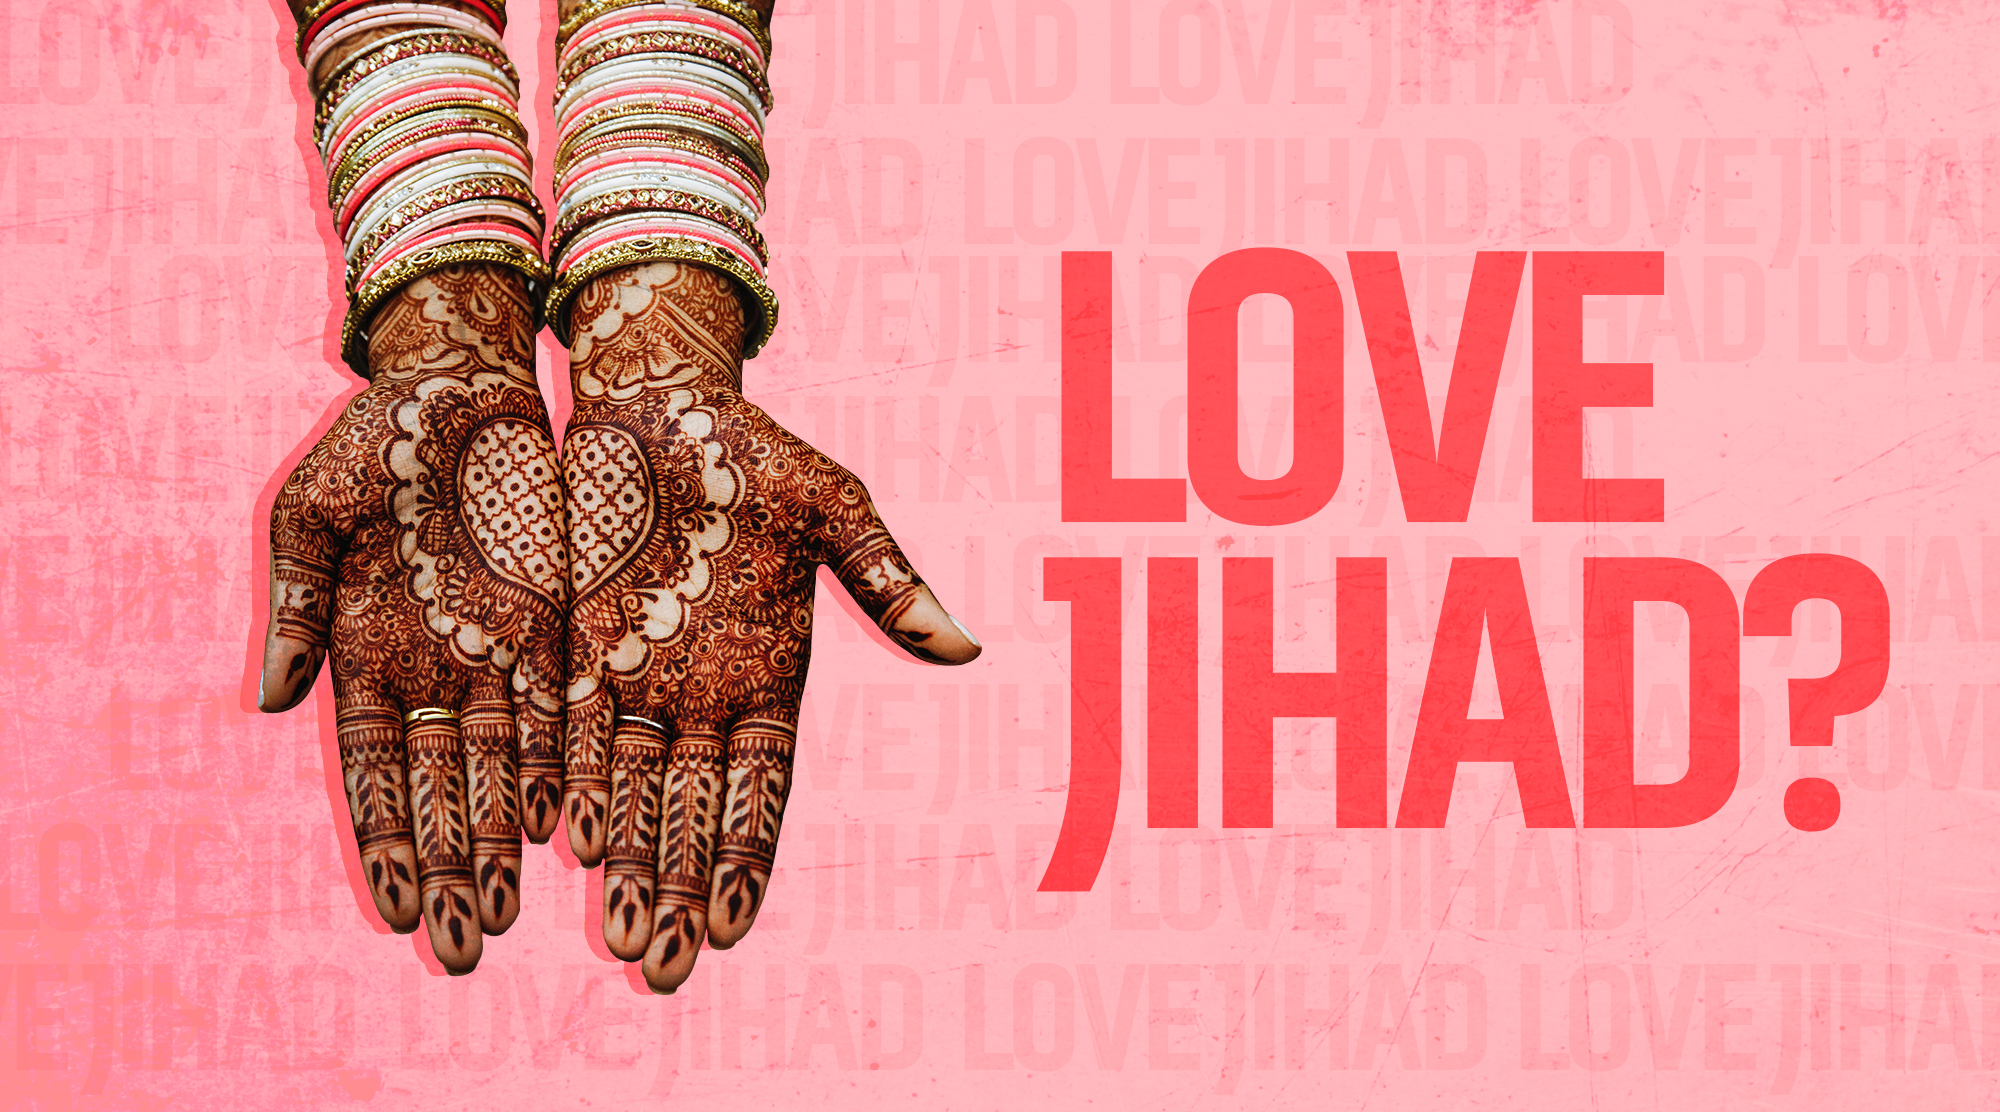 Love jihad: The moral panic gripping India